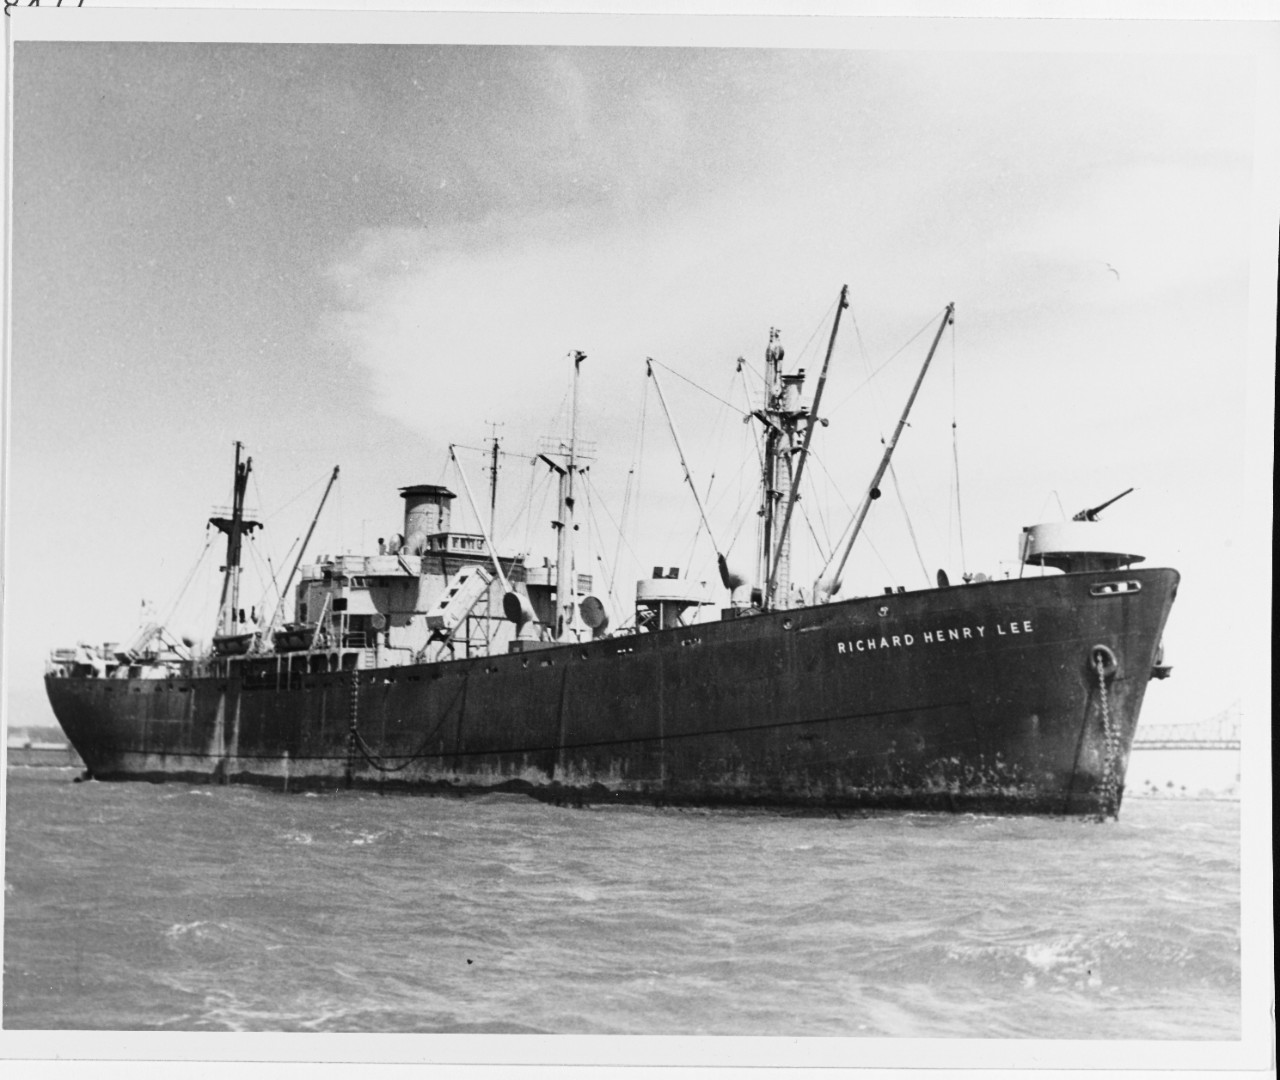 SS RICHARD HENRY LEE (U.S. merchant cargo ship, 1942-1965)